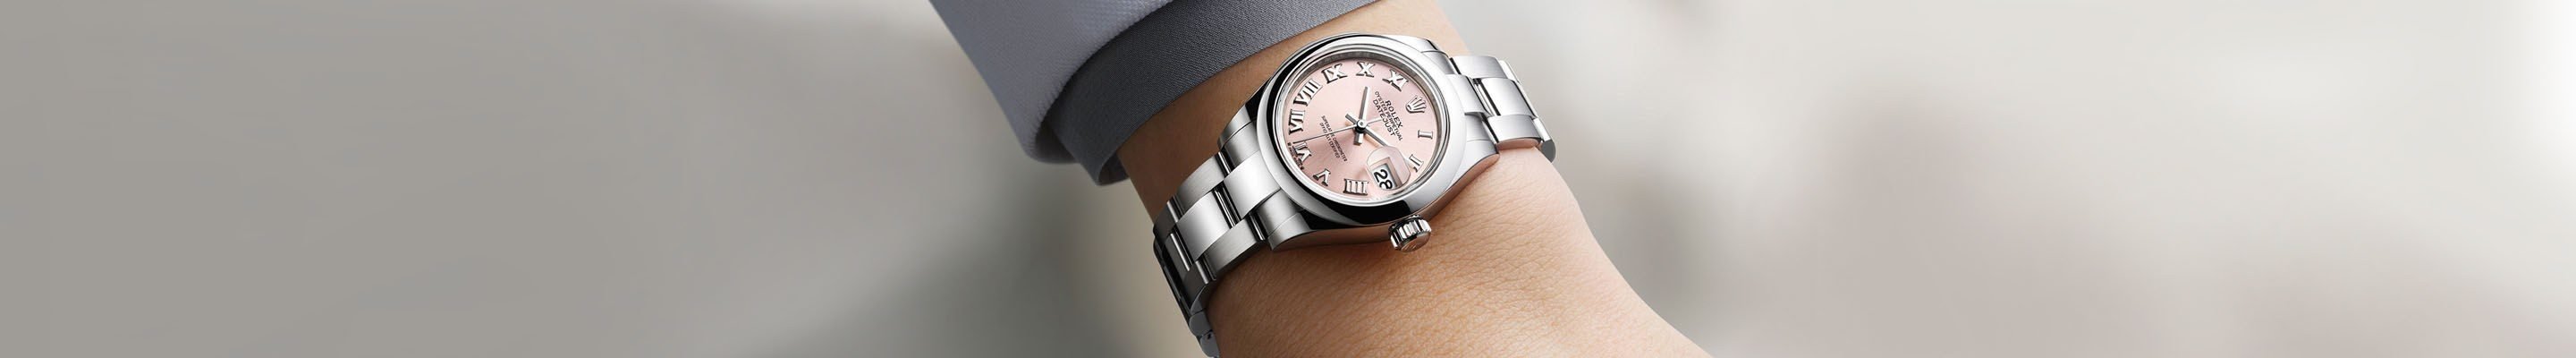 Rolex Women's Watch detail